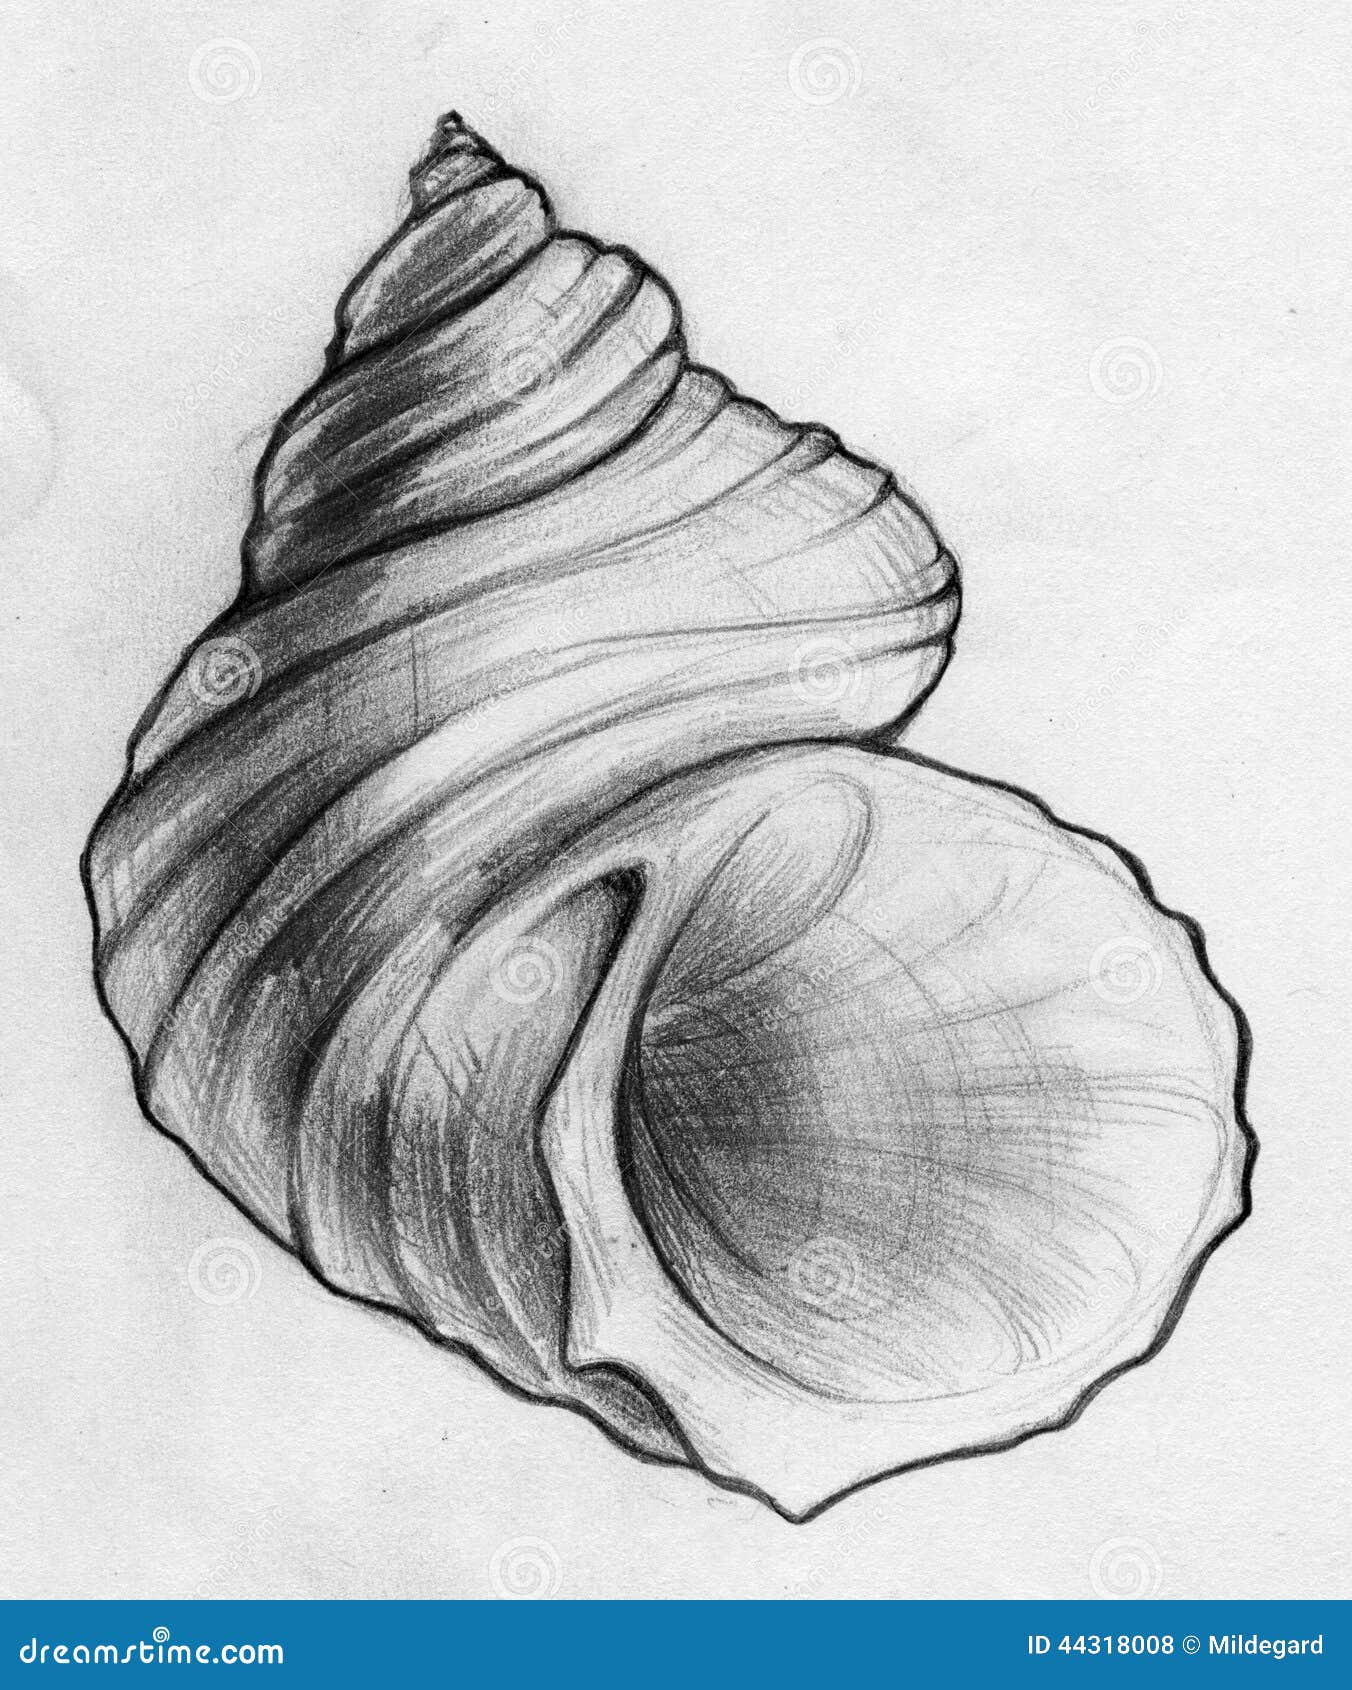 250 Detailed Pencil Sketch Of A Seashell Illustrations RoyaltyFree  Vector Graphics  Clip Art  iStock